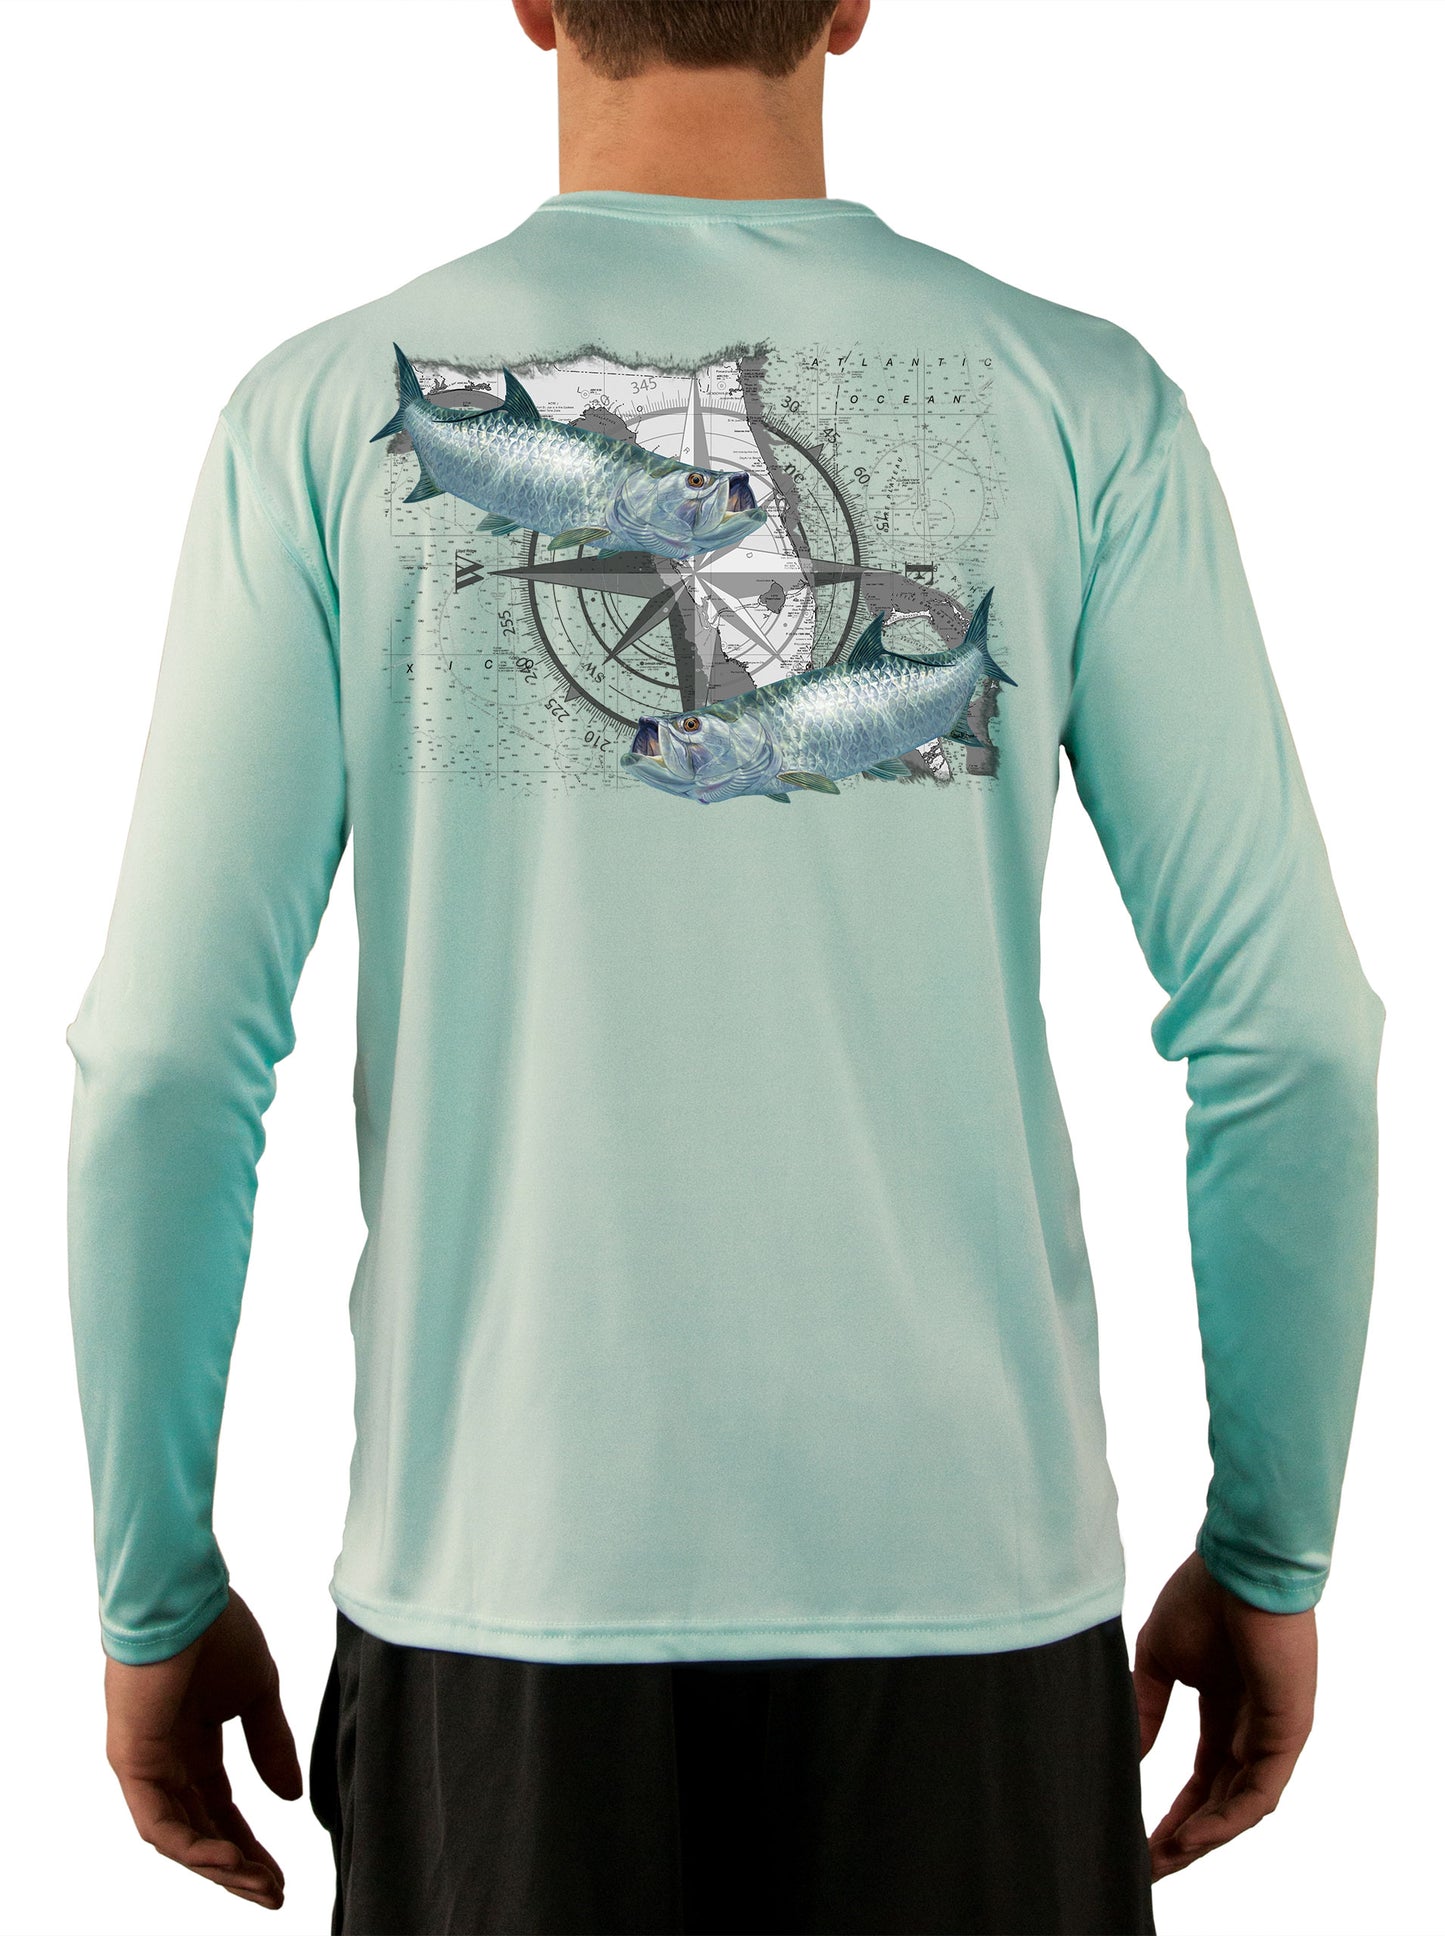 Tarpon Compass Fishing Shirts for Men Florida State Flag Medium / Ice Blue